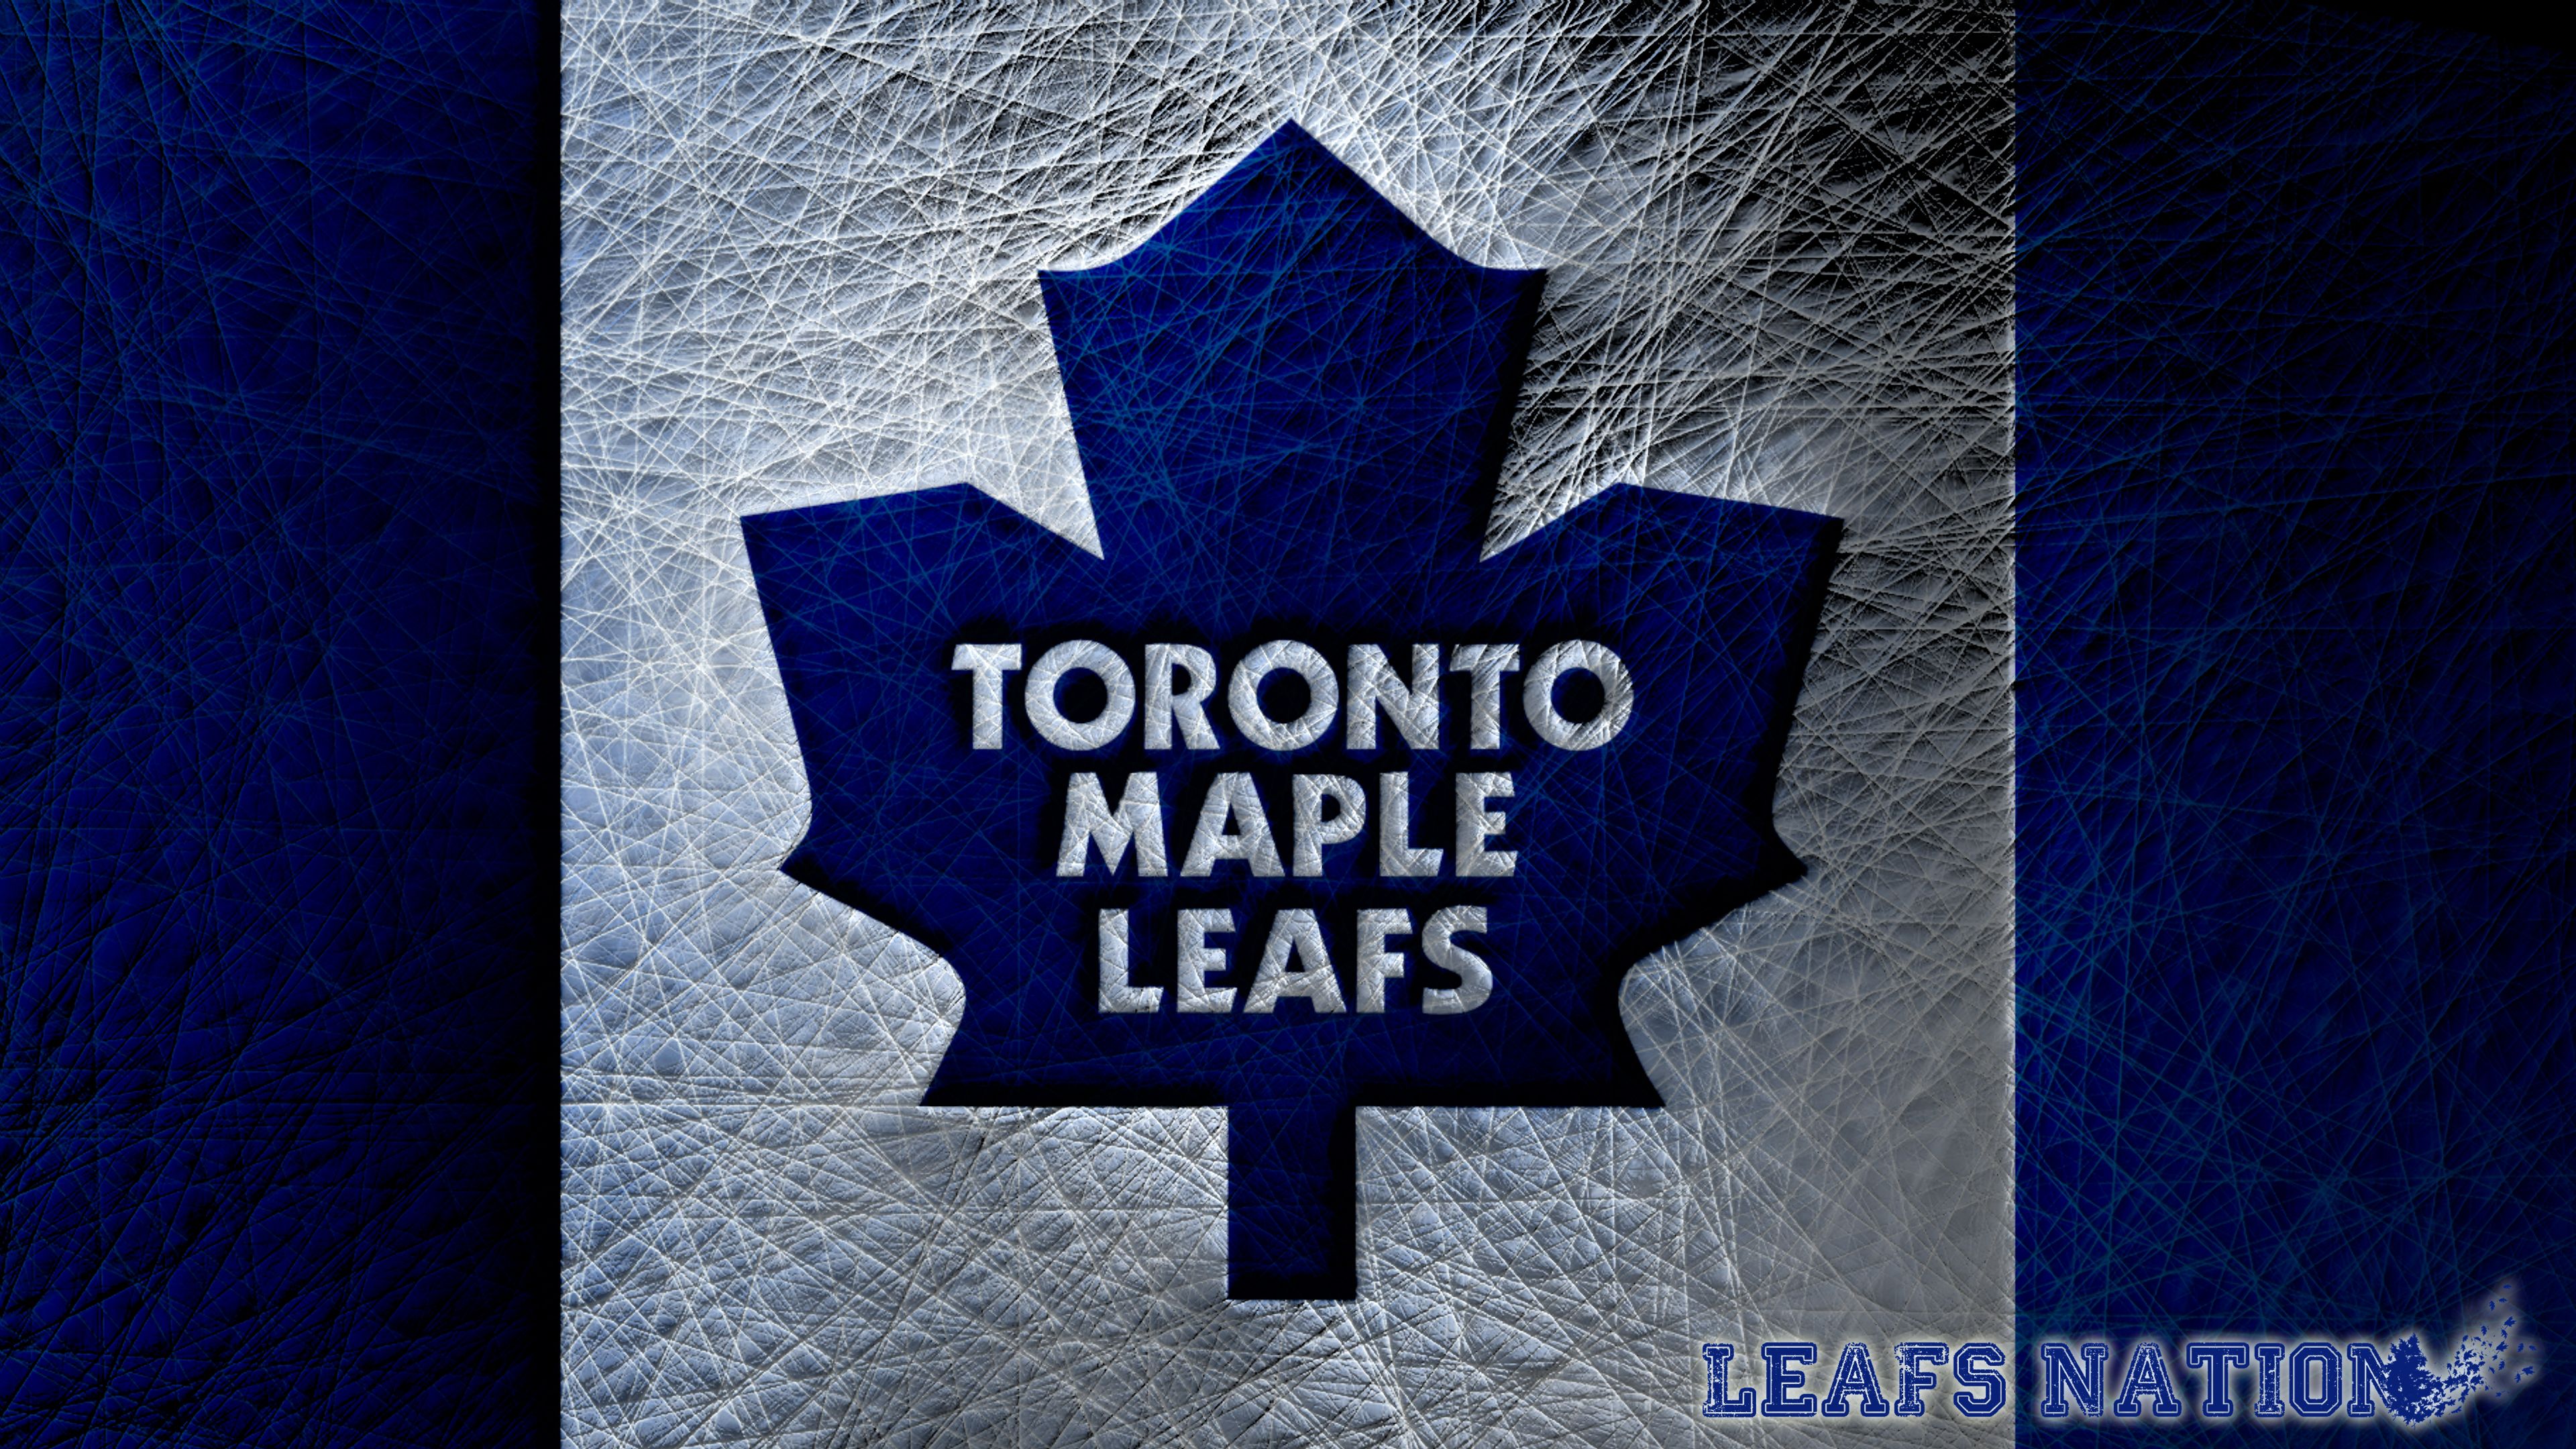 Artist Photographer Shahveer A Toronto Maple Leafs Wallpaper That Has